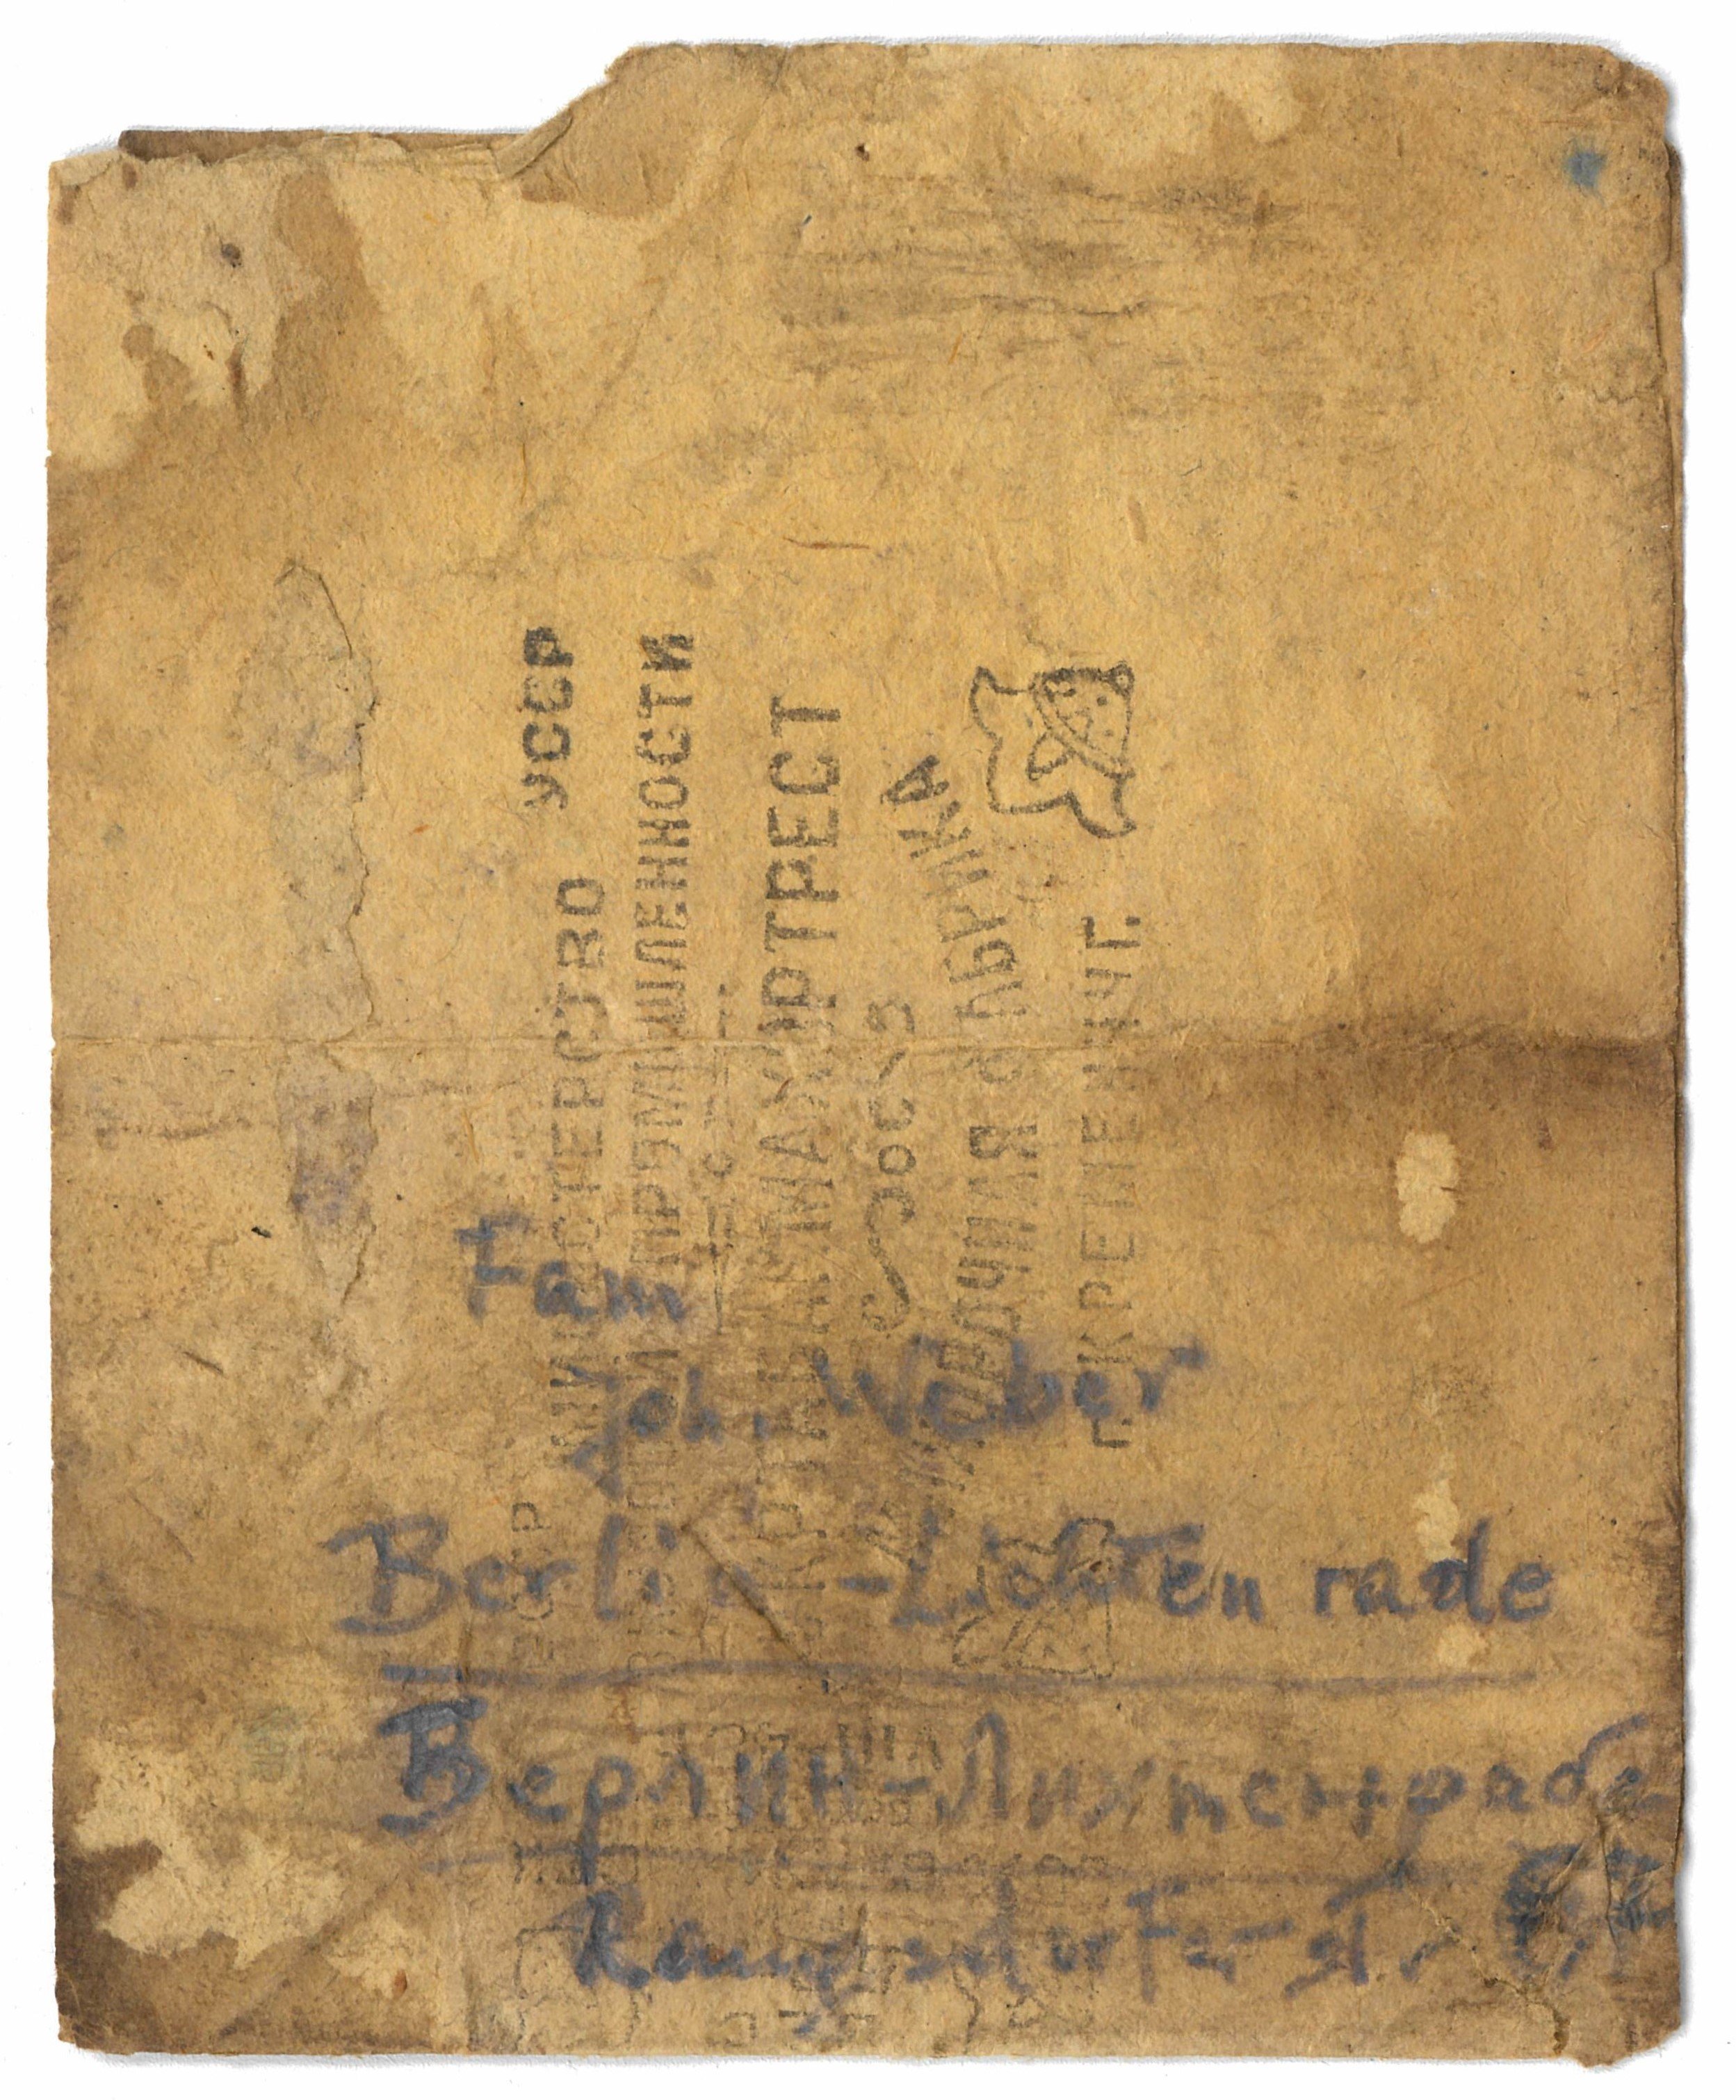 Kriegsgefangenenbrief auf Tabakverpackung, 1947 (Museum Berlin-Karlshorst CC BY-NC-SA)